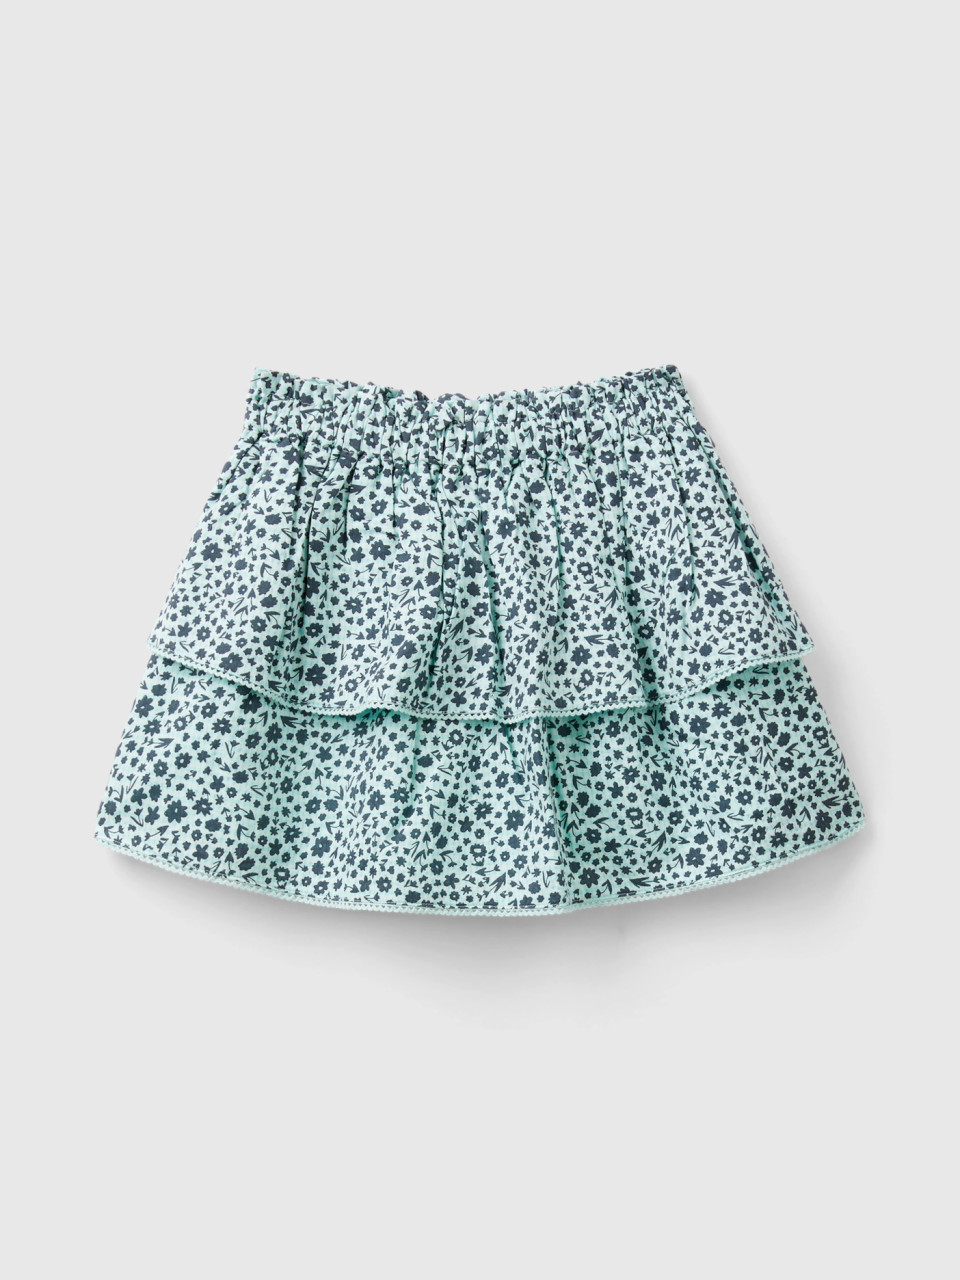 Benetton, Flounced Skirt With Floral Print, Aqua, Kids